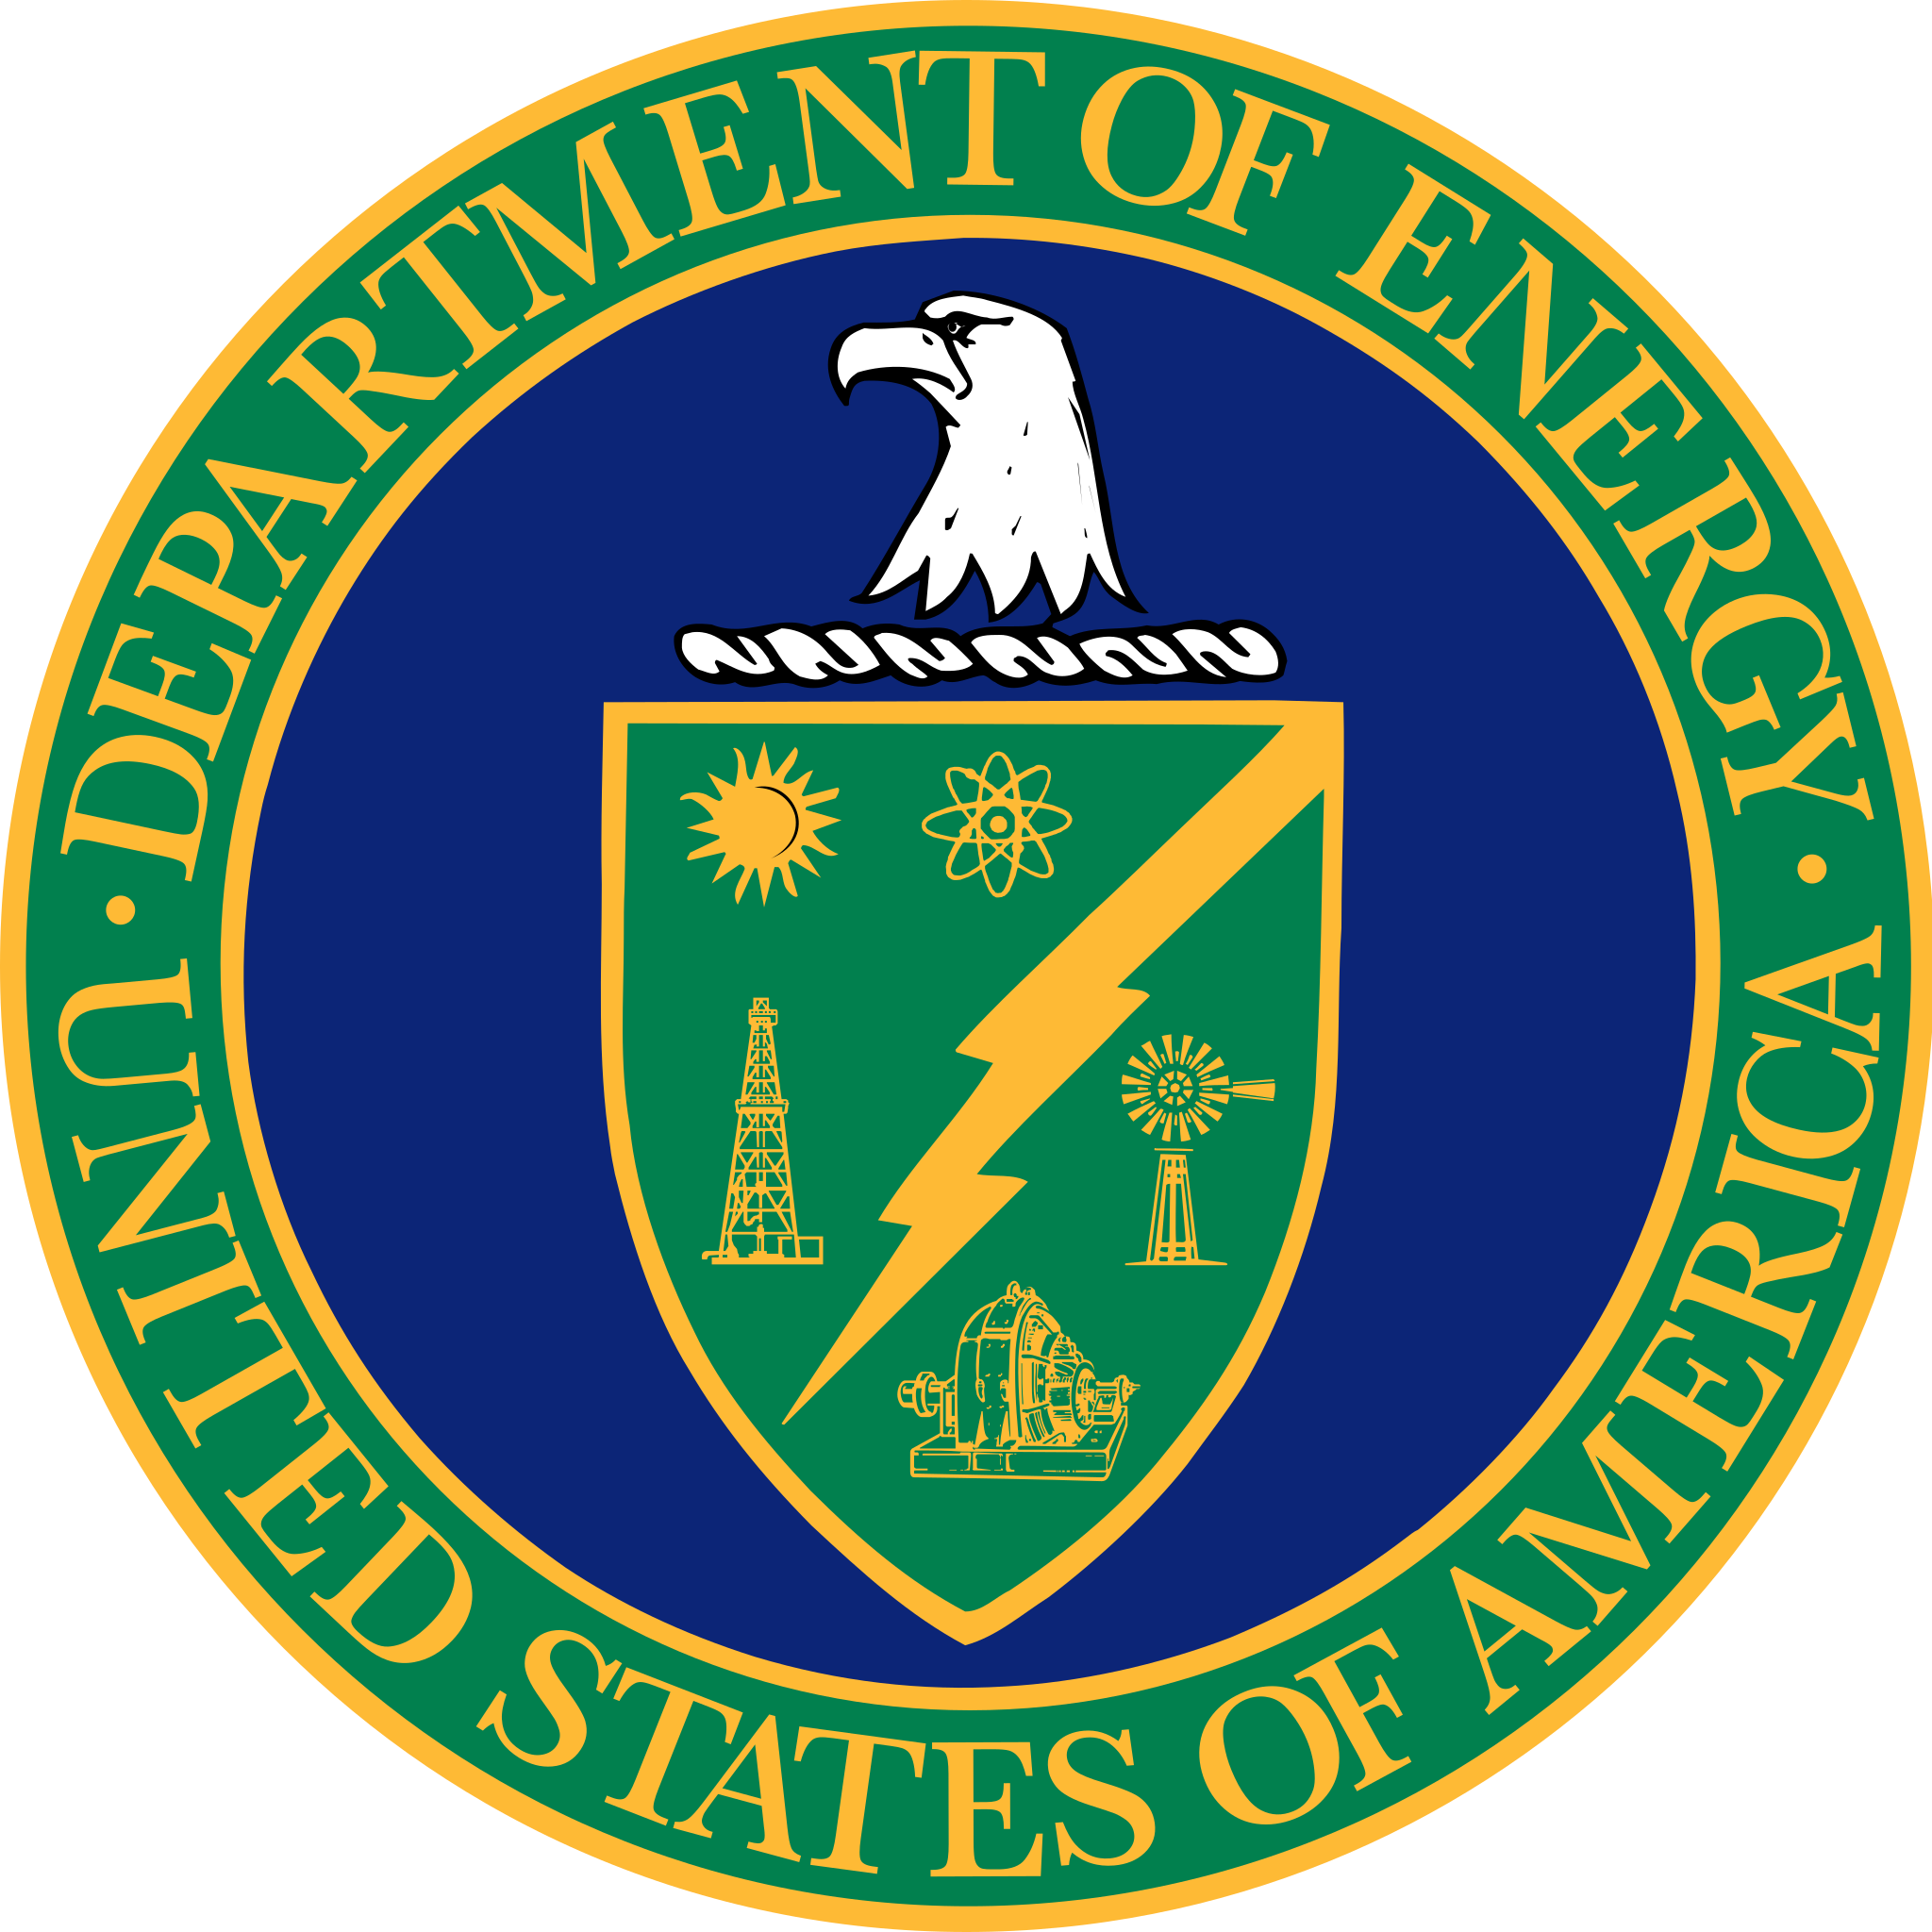 Department of Energy (DOE)